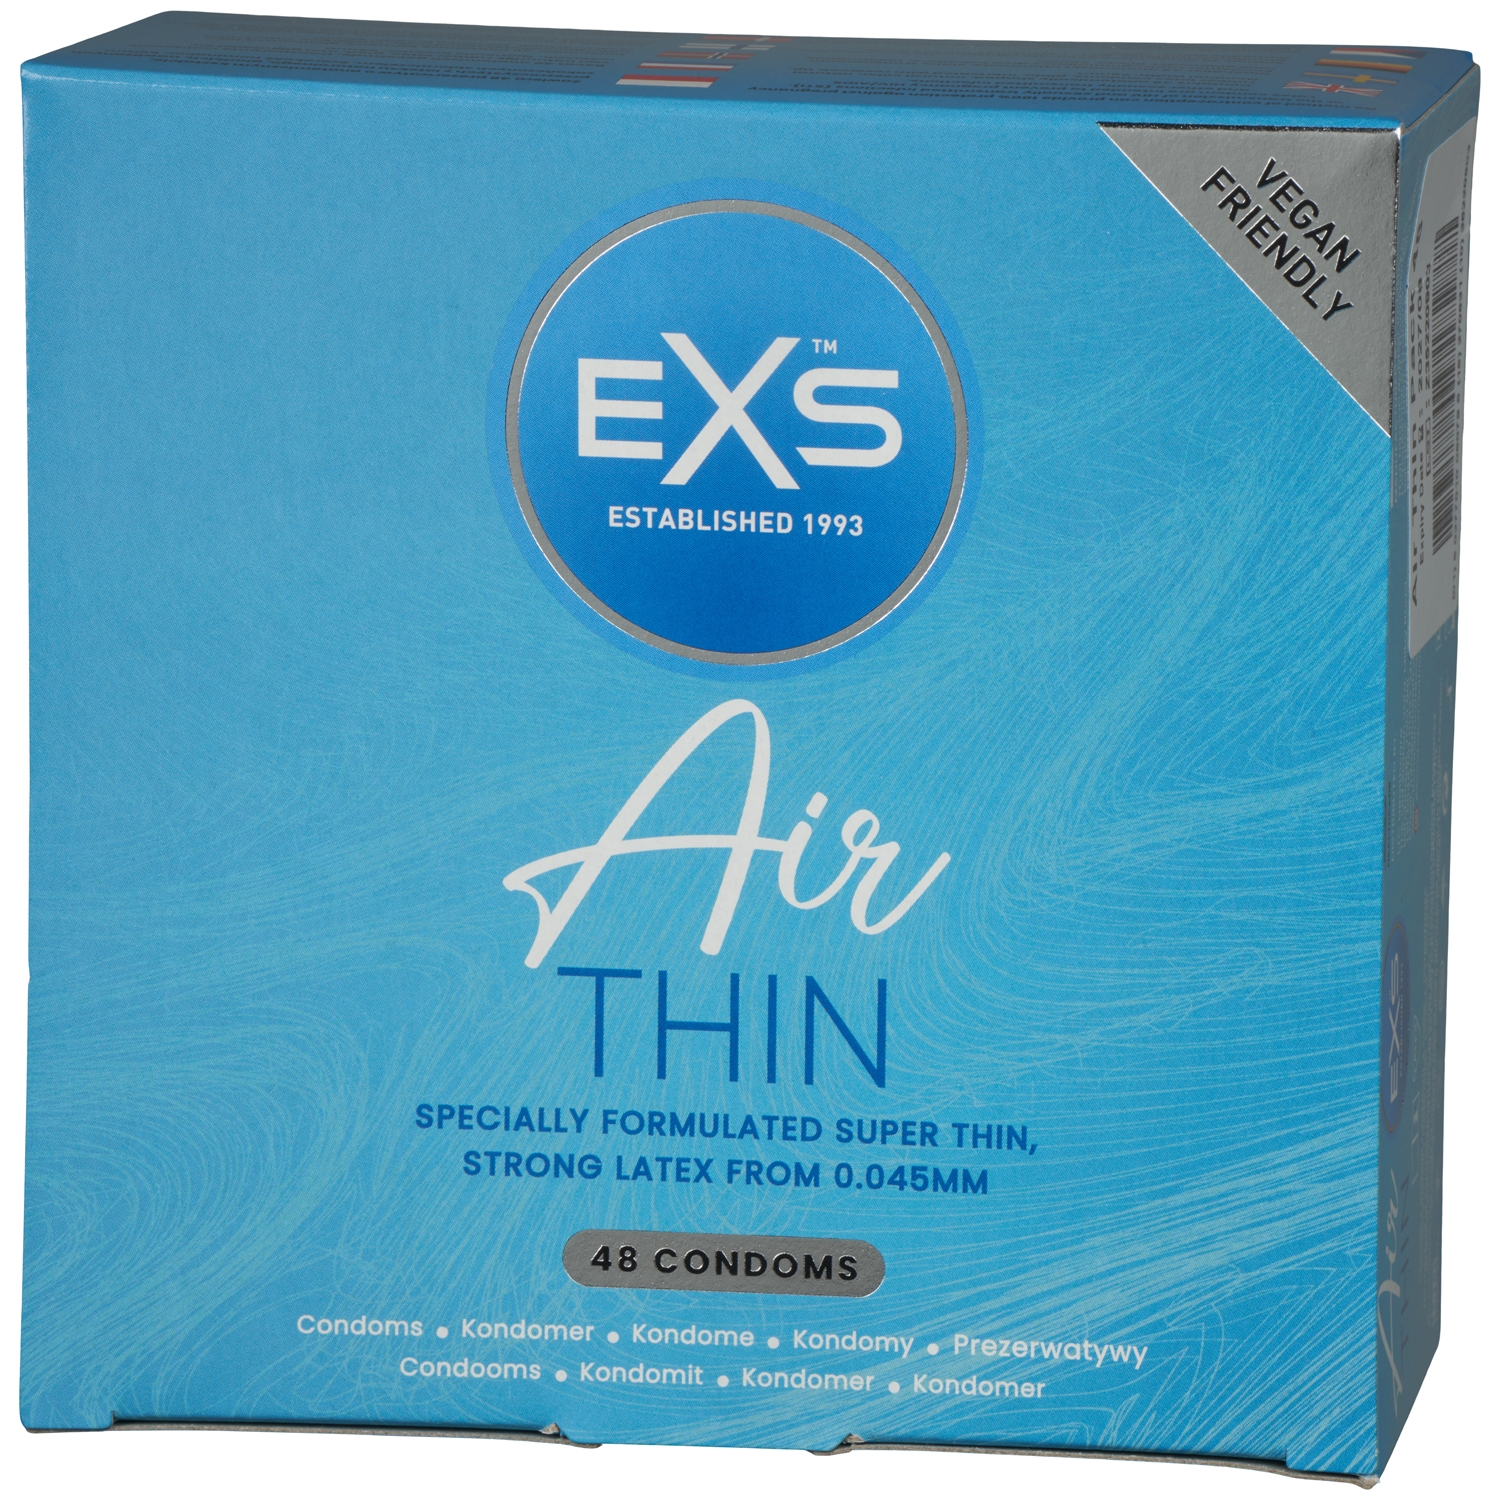 EXS EXS Air Thin Kondomer 48 stk. - Klar